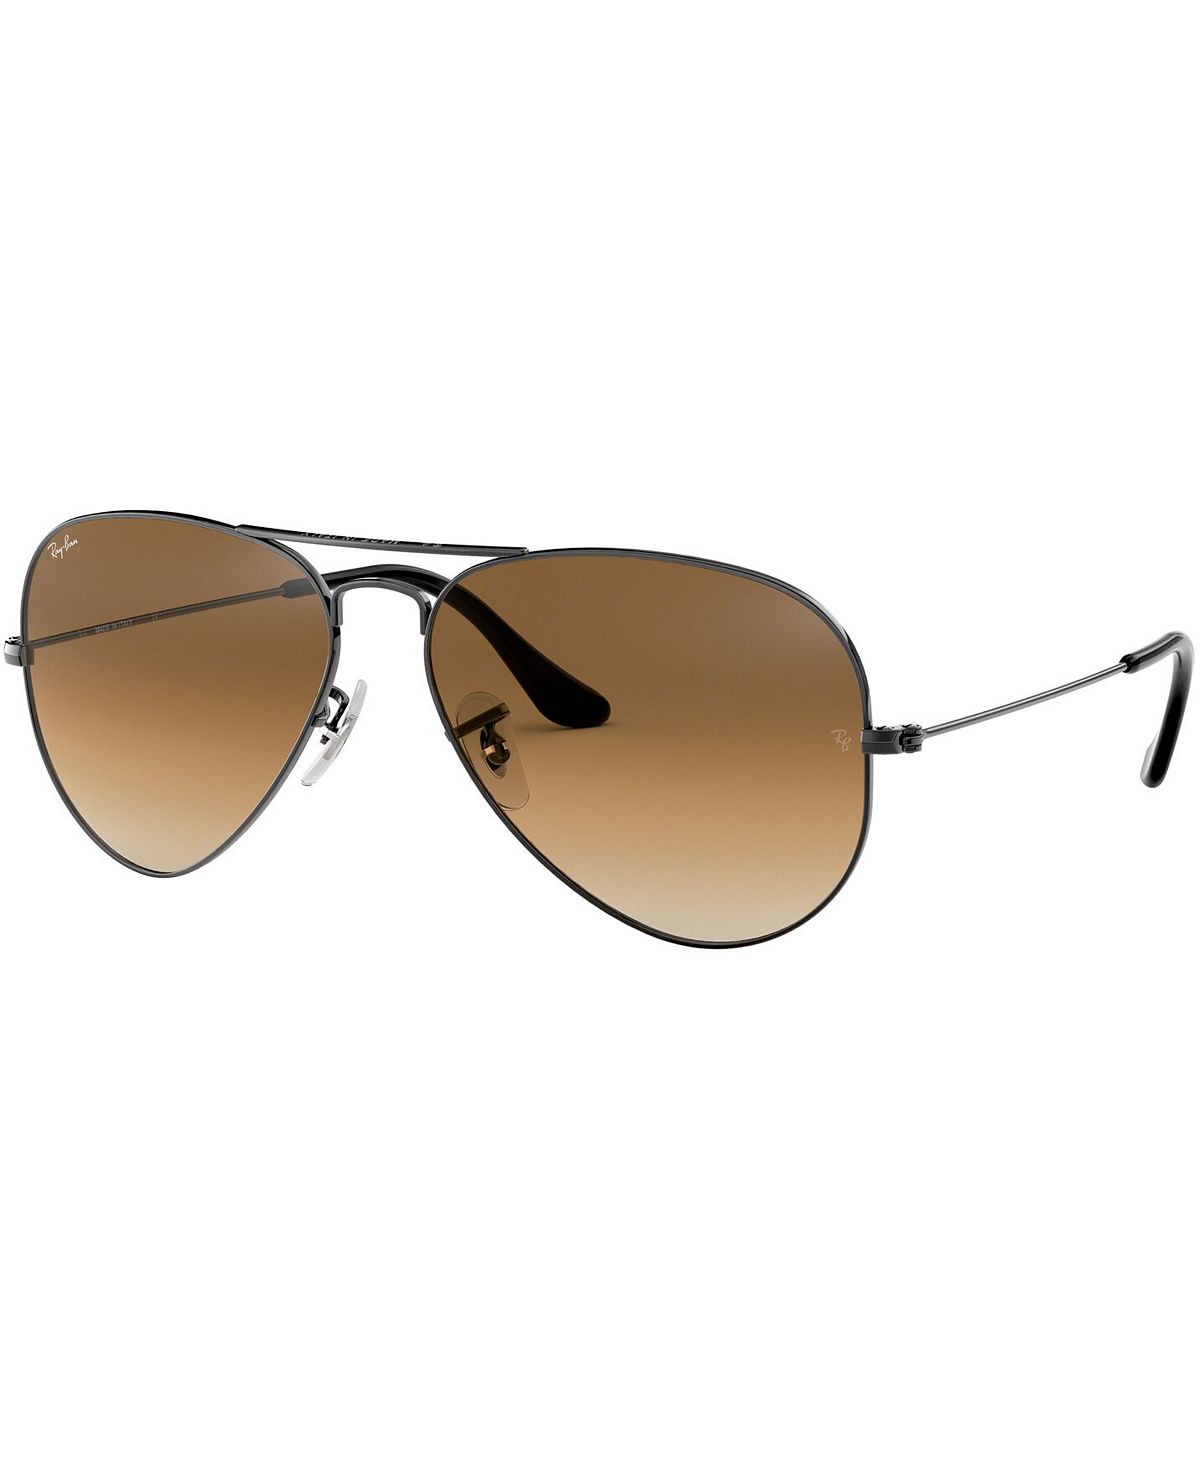 ray ban синий Солнцезащитные очки, rb3025 aviator gradient Ray-Ban, мульти